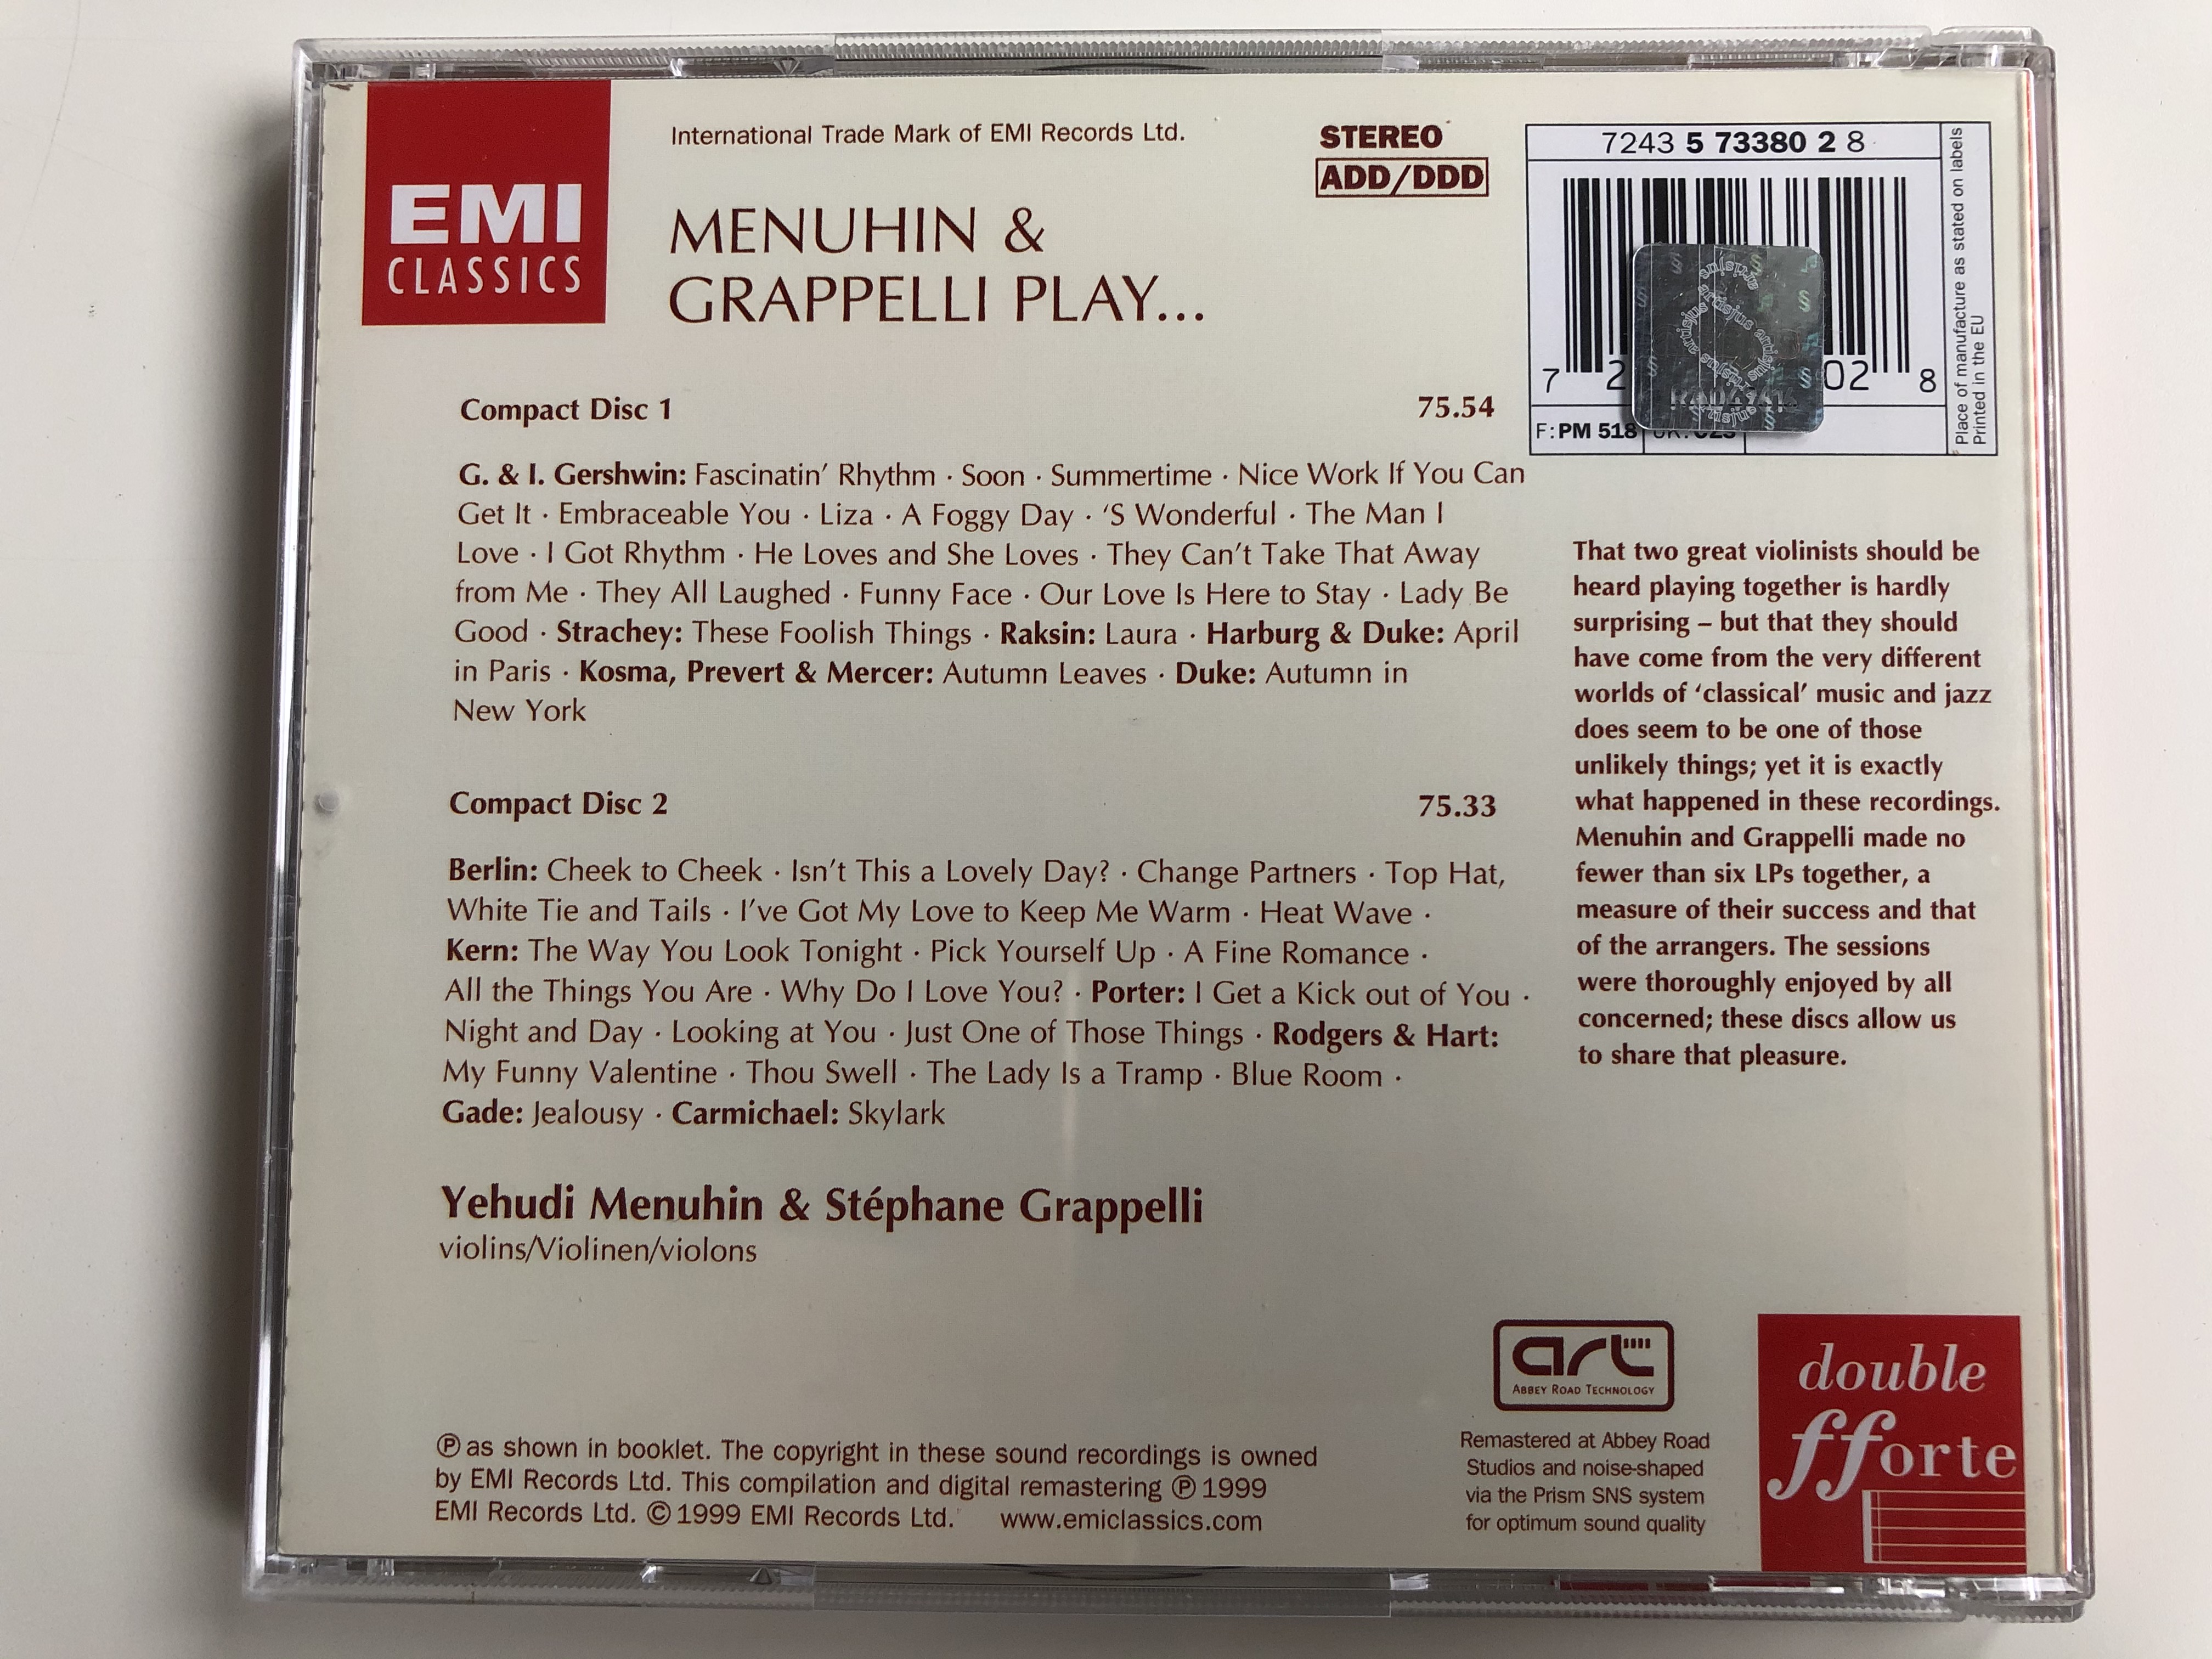 menuhin-grappelli-play...-gershwin-berlin-kern-porter-rodgers-hart-and-others-yehudi-menuhin-st-phane-grappelli-double-orte-emi-classics-2x-audio-cd-1999-stereo-724357338028.jpg